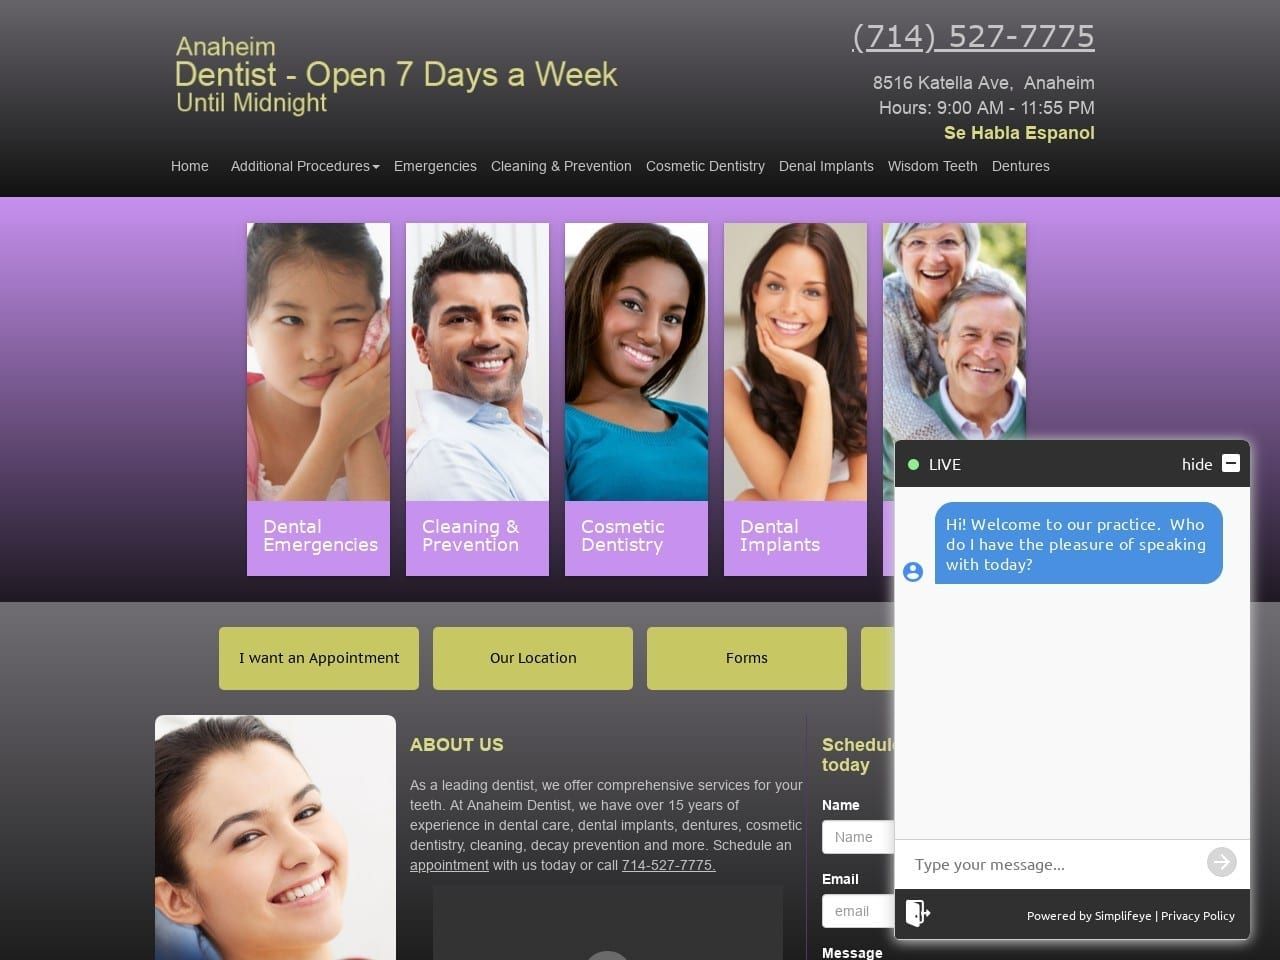 Anaheim Dentist Website Screenshot from adentist4me.com